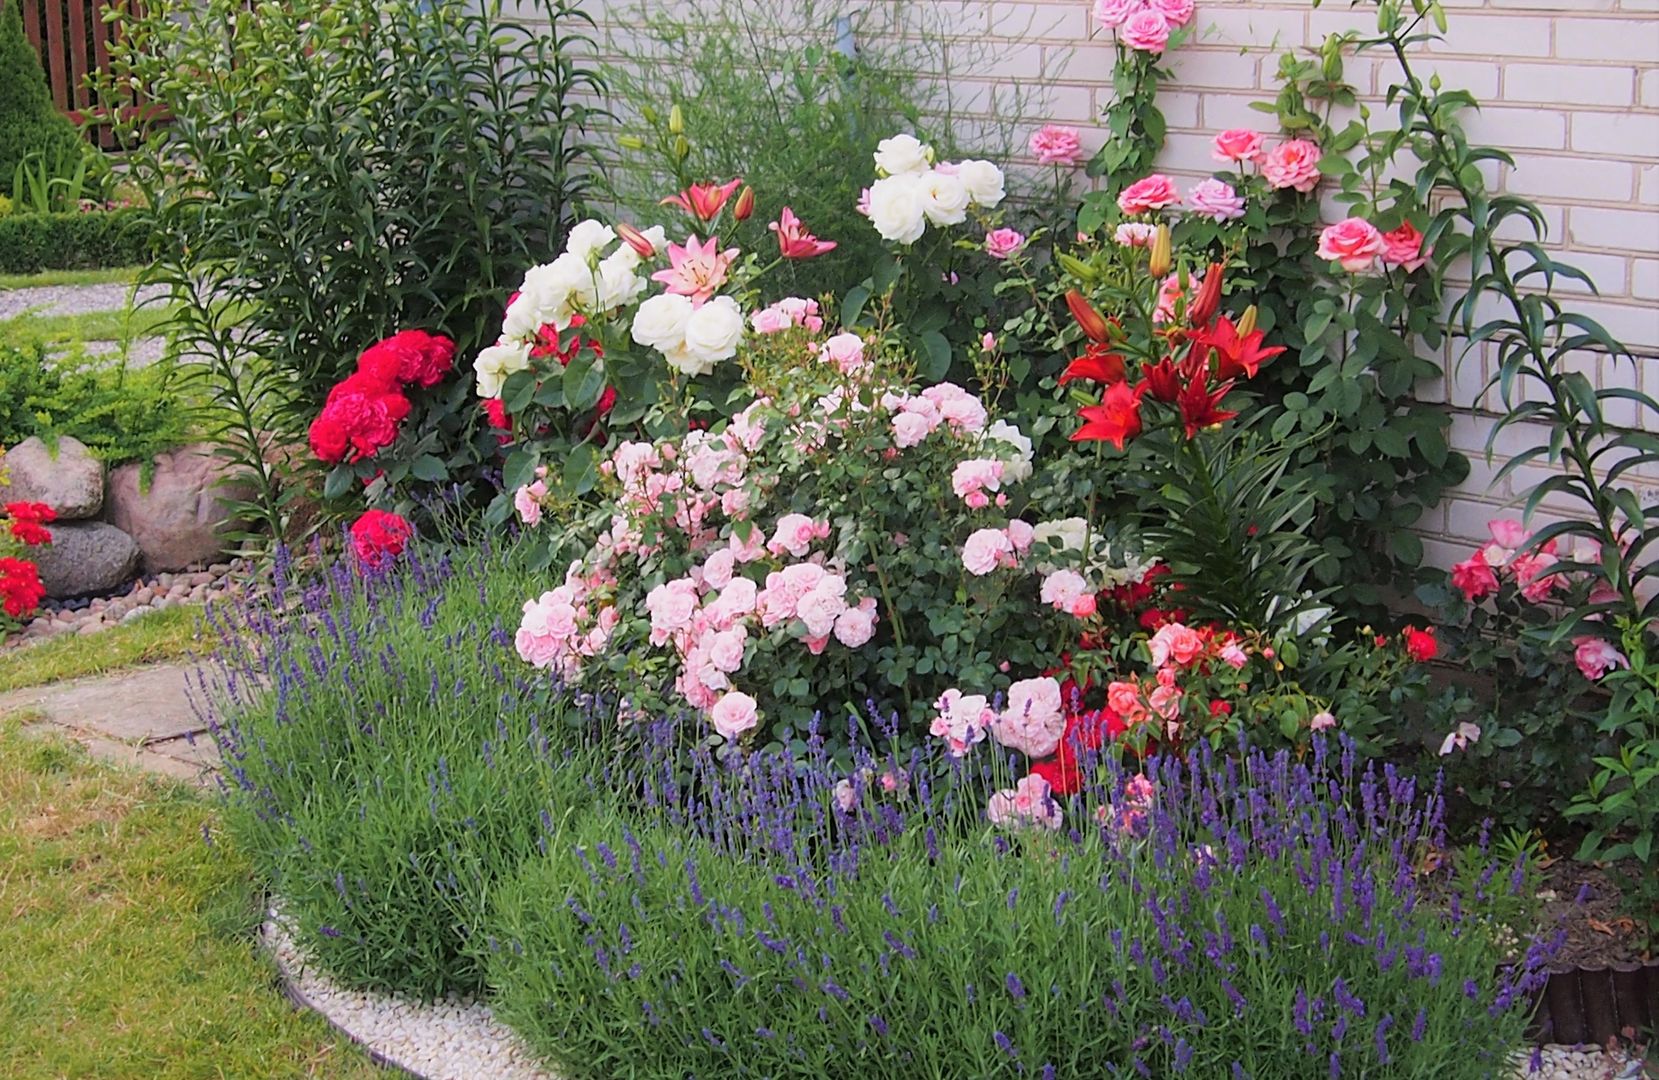 OGRÓD RÓŻANY, MAGIA OGRODU MAGIA OGRODU Rustykalny ogród ogród różany,różanka,projekt rabaty,rabata różana,róża i lawenda,bonica róża,róże w ogrodzie,magia ogrodu,rustykalny ogród,wiejski ogród,różowe róże,róża